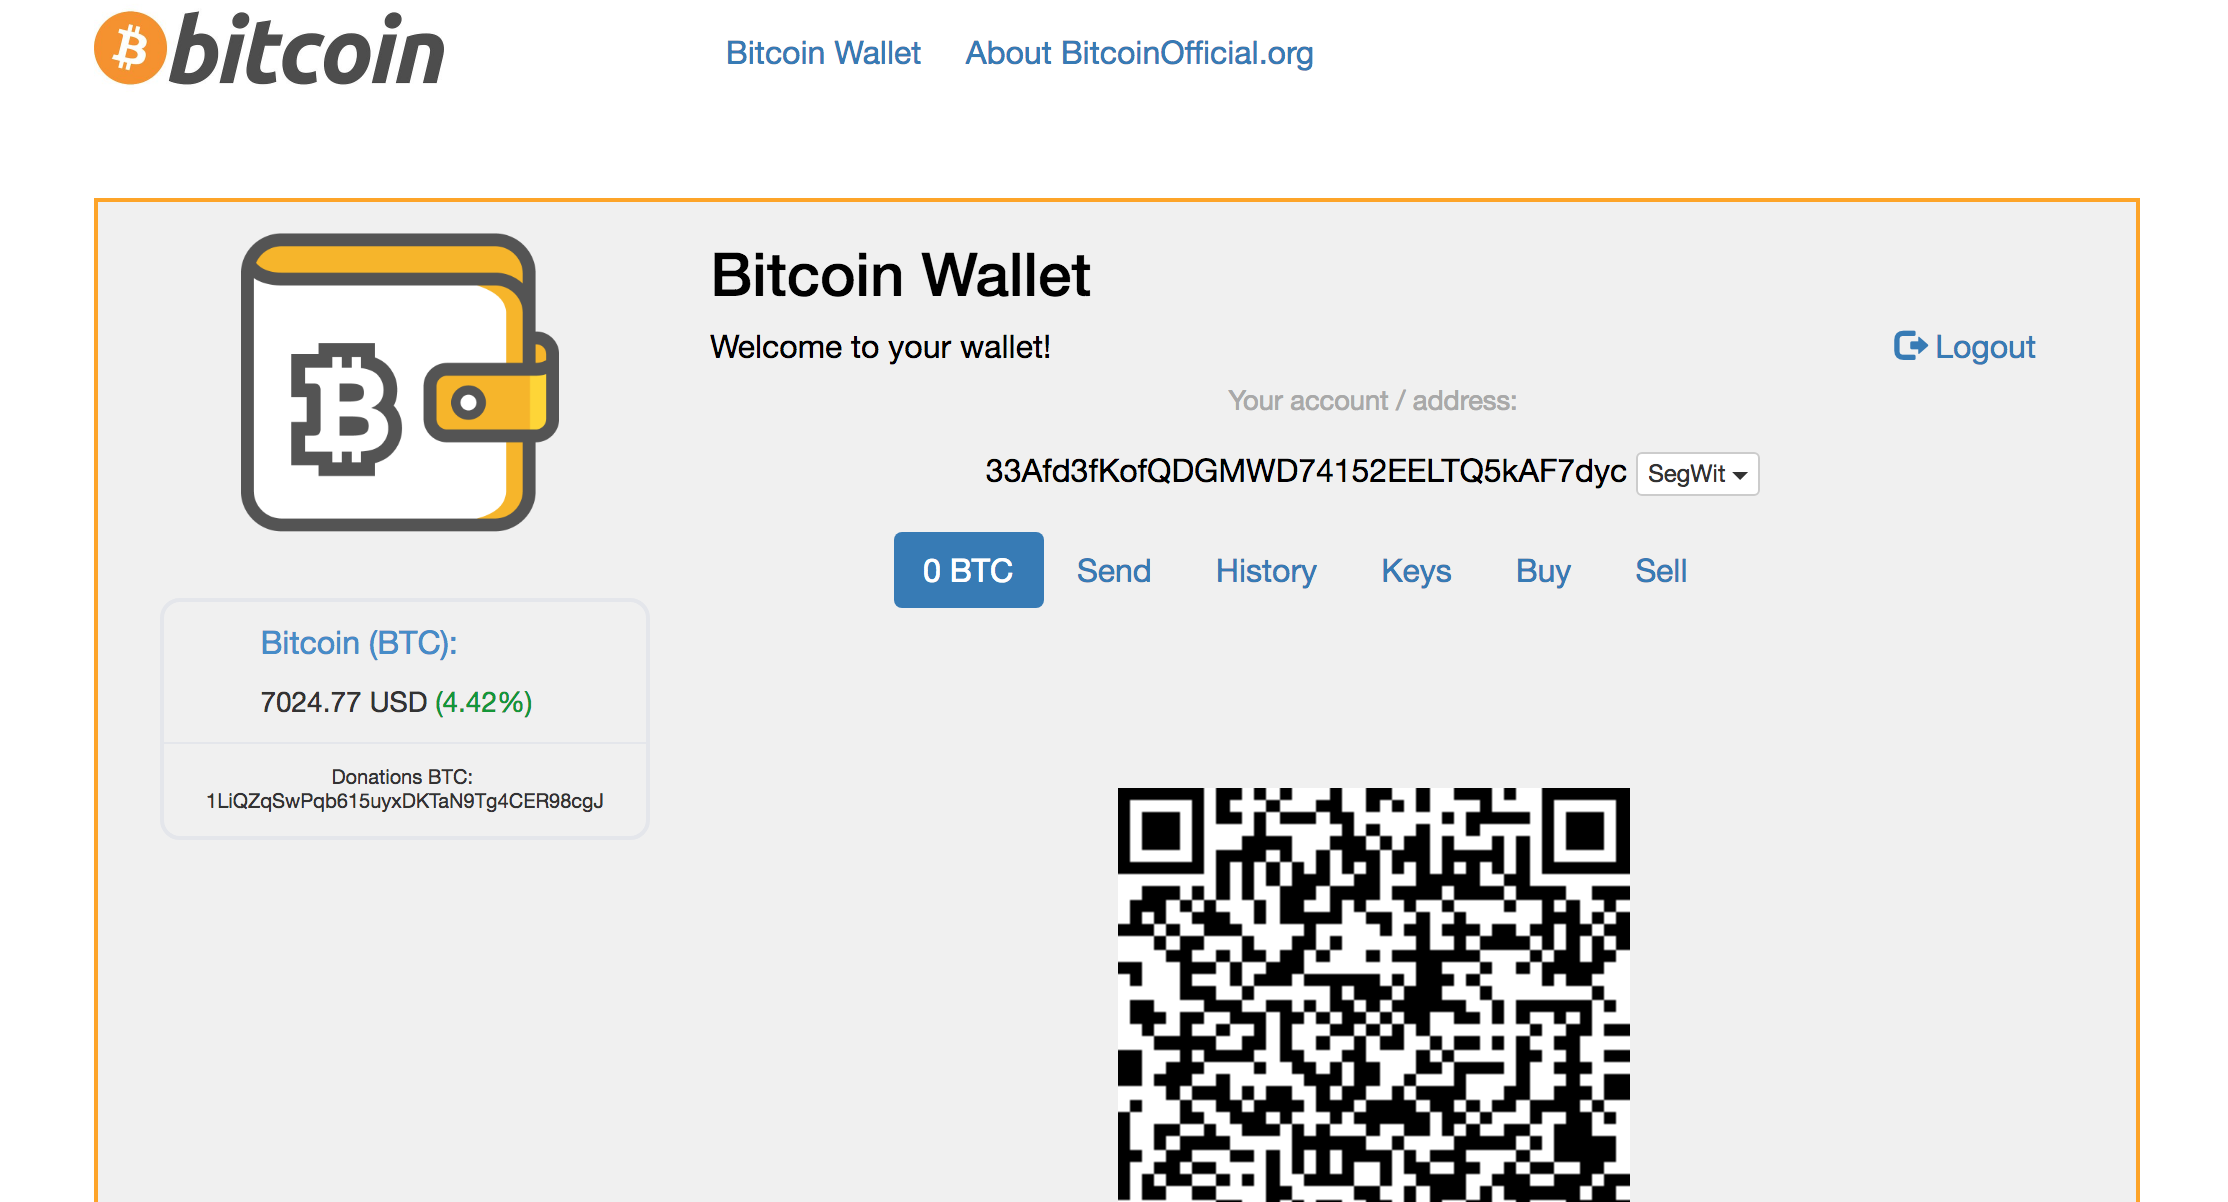 How to generate bitcoin wallet address купить биткоин онлайн